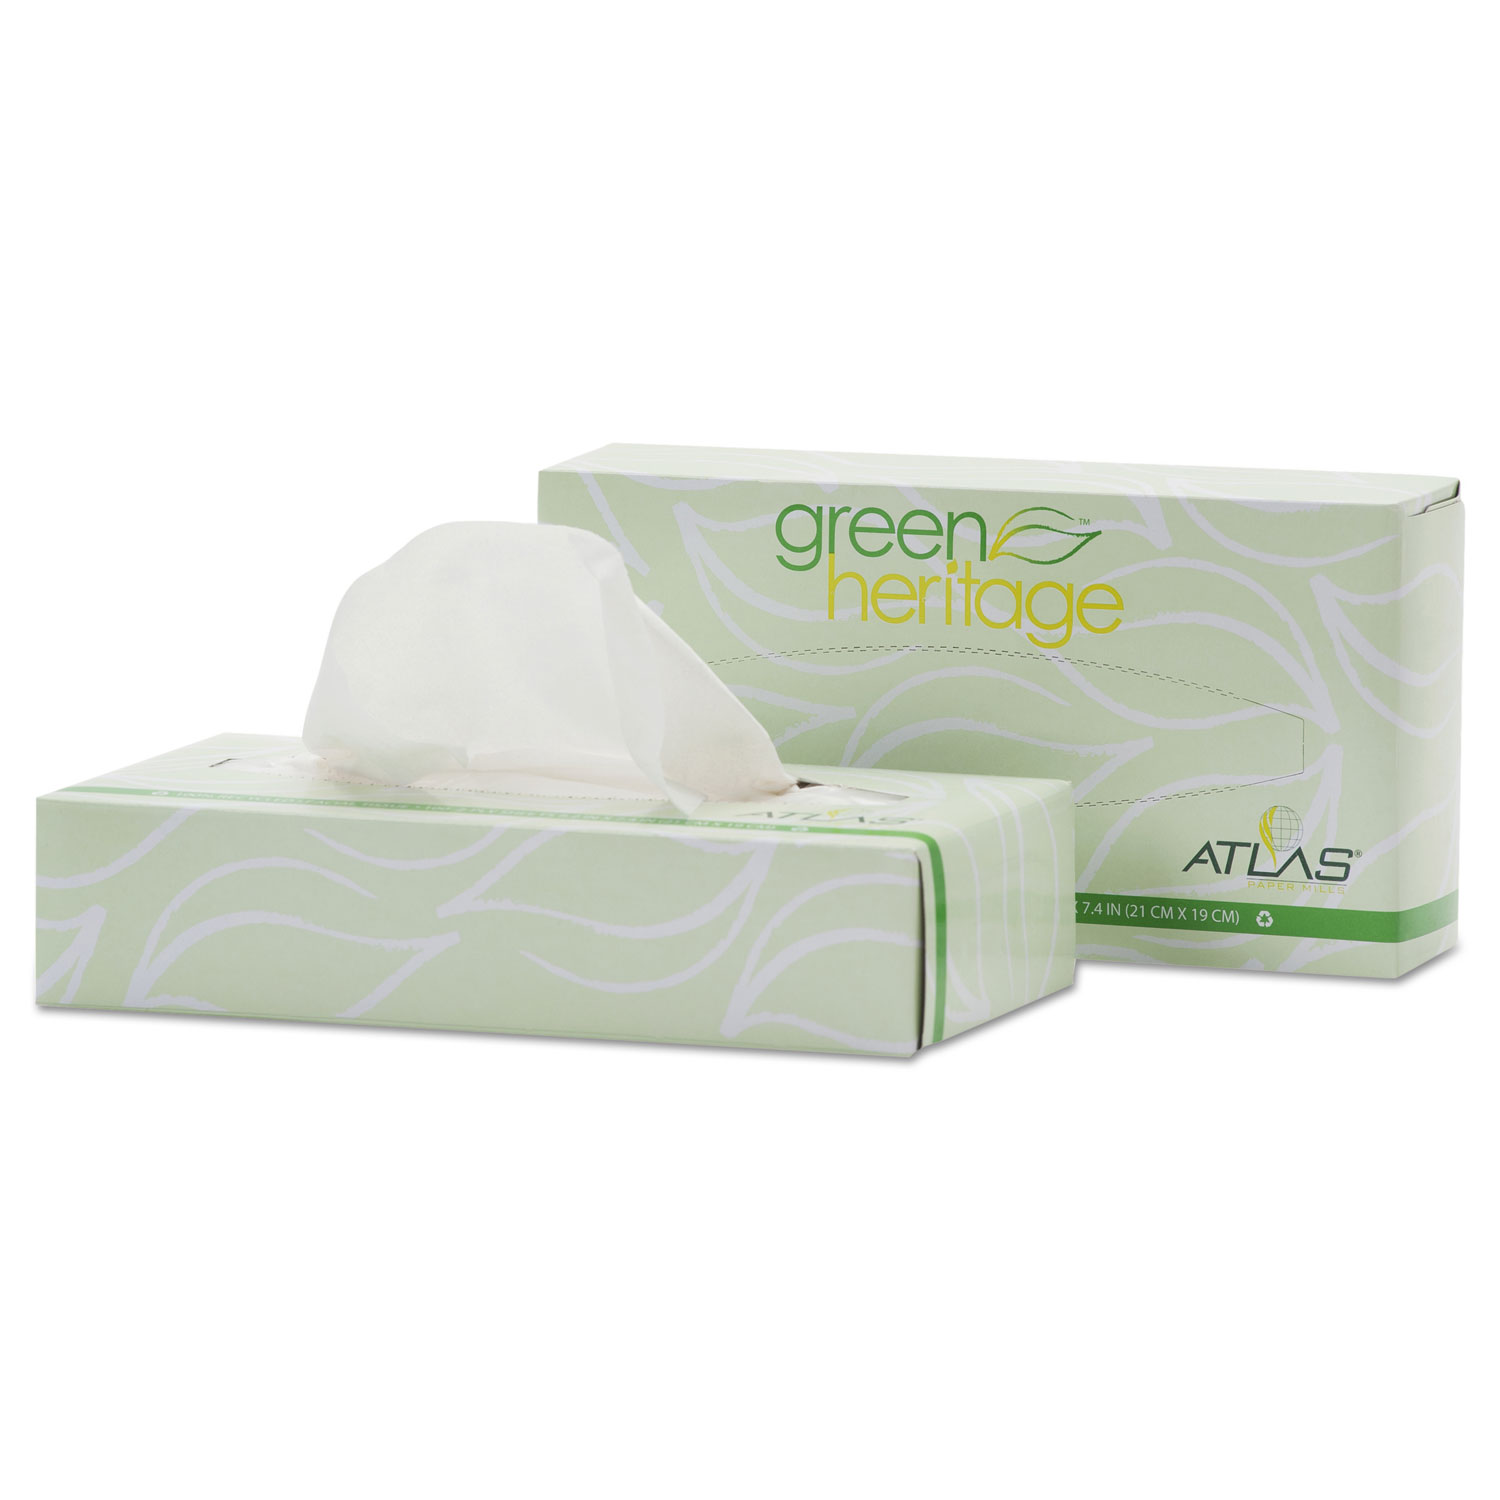 Green Heritage Facial Tissue, 2-Ply, White, 7 4/5 x 8, 100/Box, 72 Box/Carton